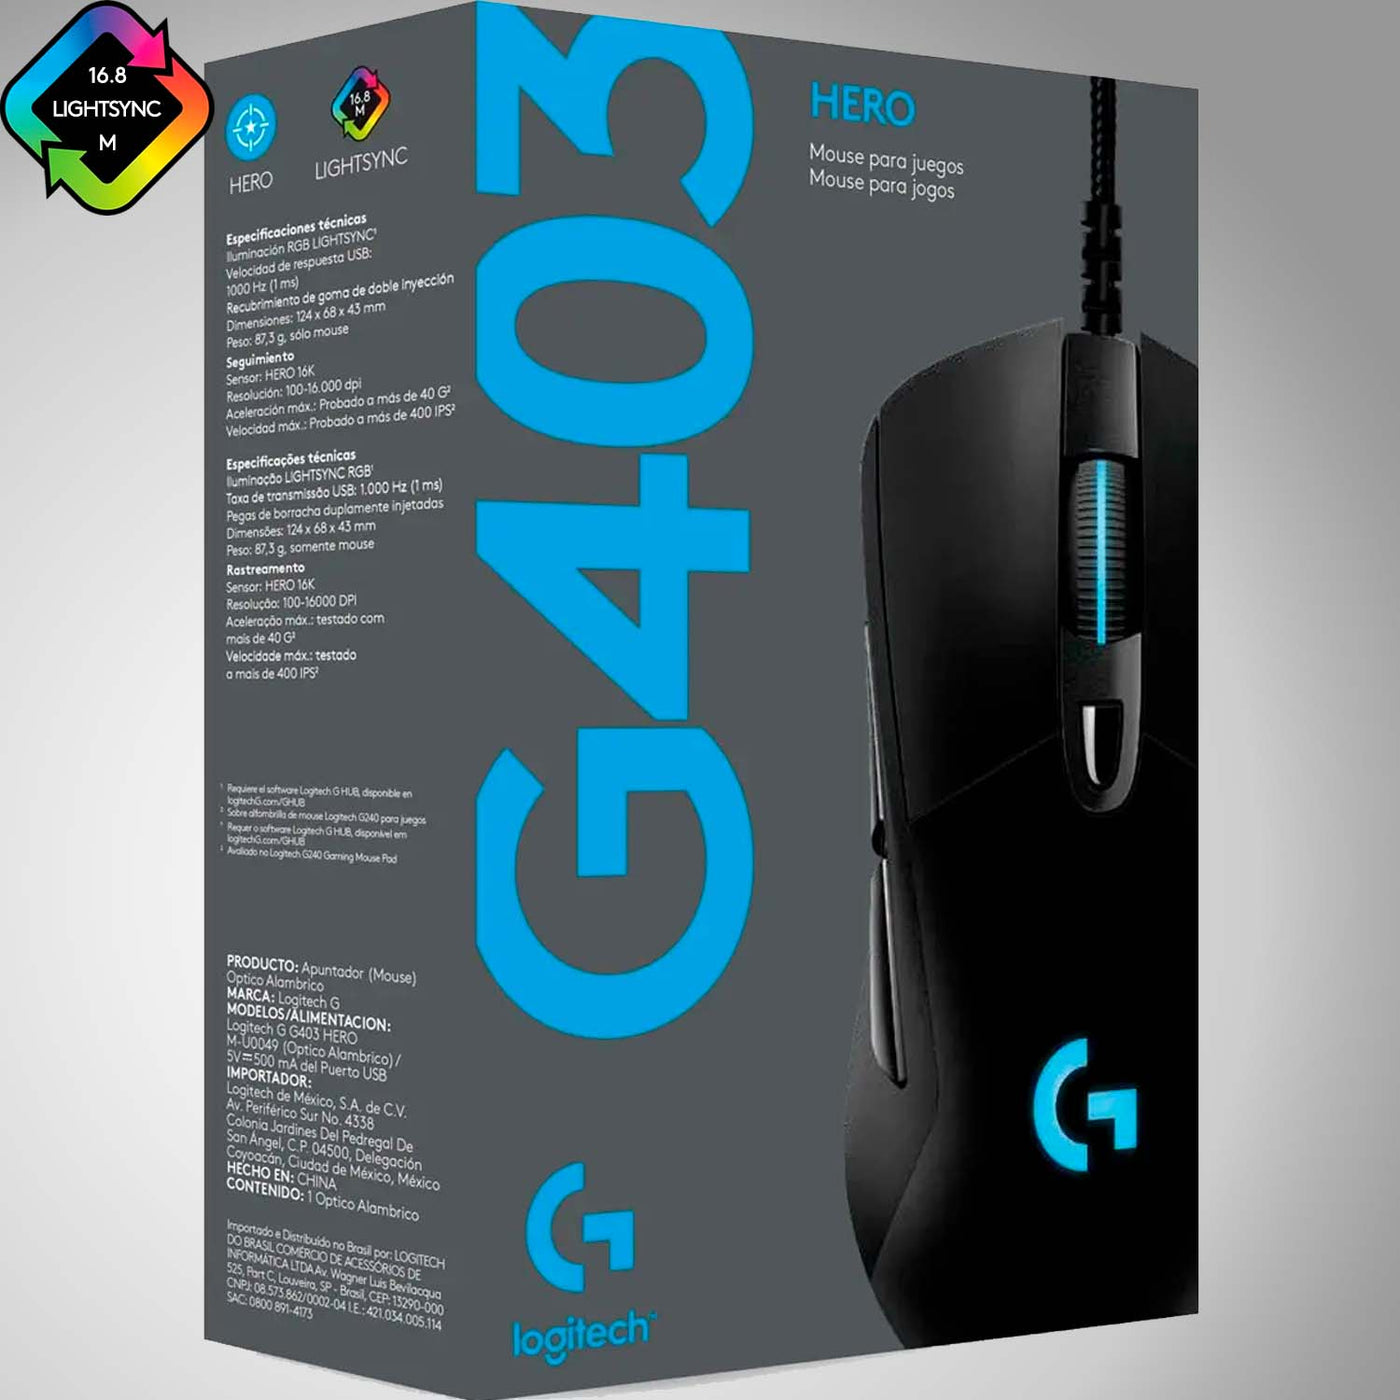  Logitech G403 Hero 25K Gaming Mouse, Lightsync RGB